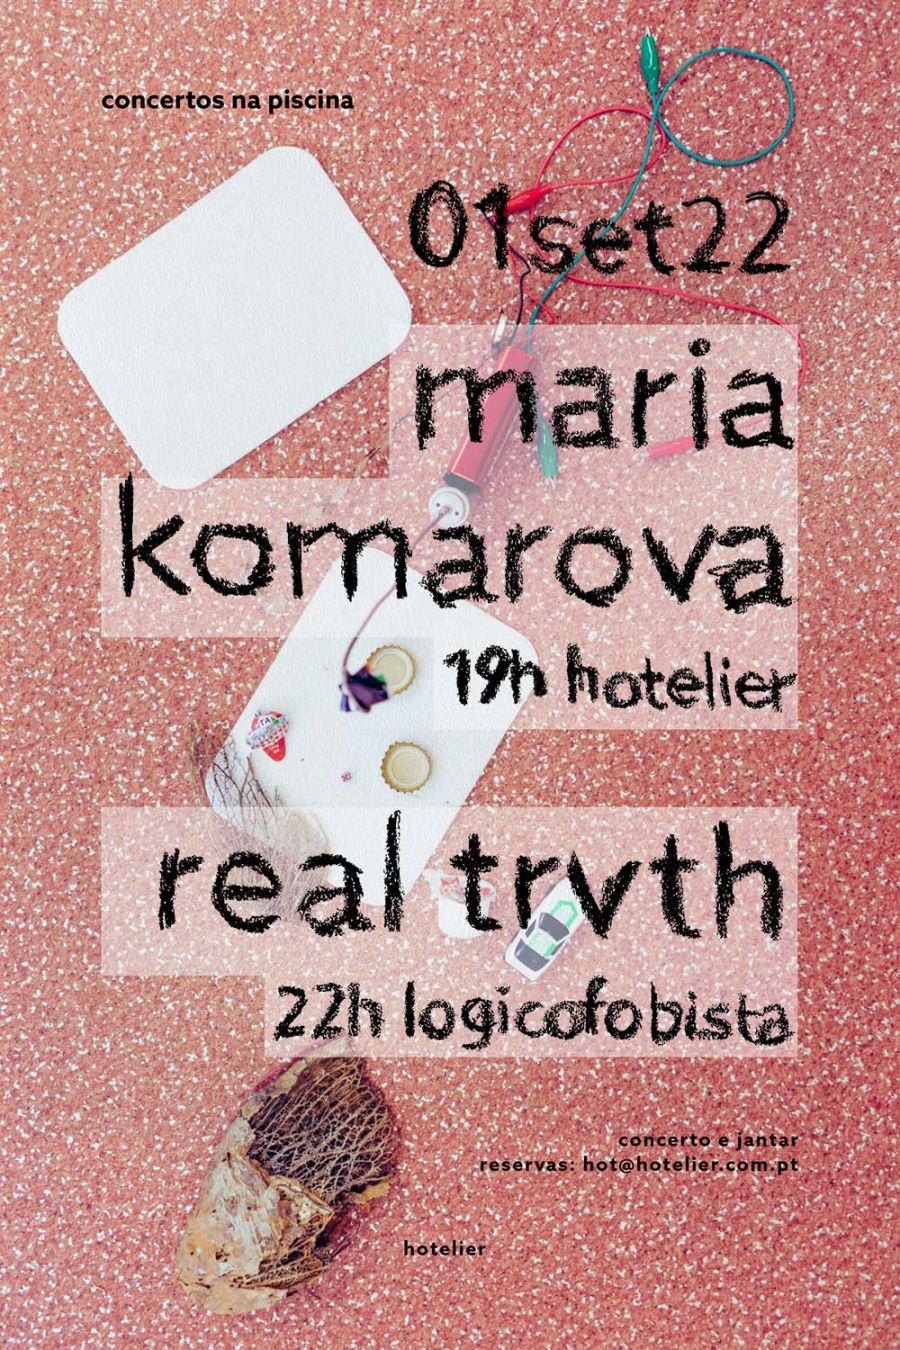 CONCERTOSNAPISCINA 15# - MARIA KOMAROVA